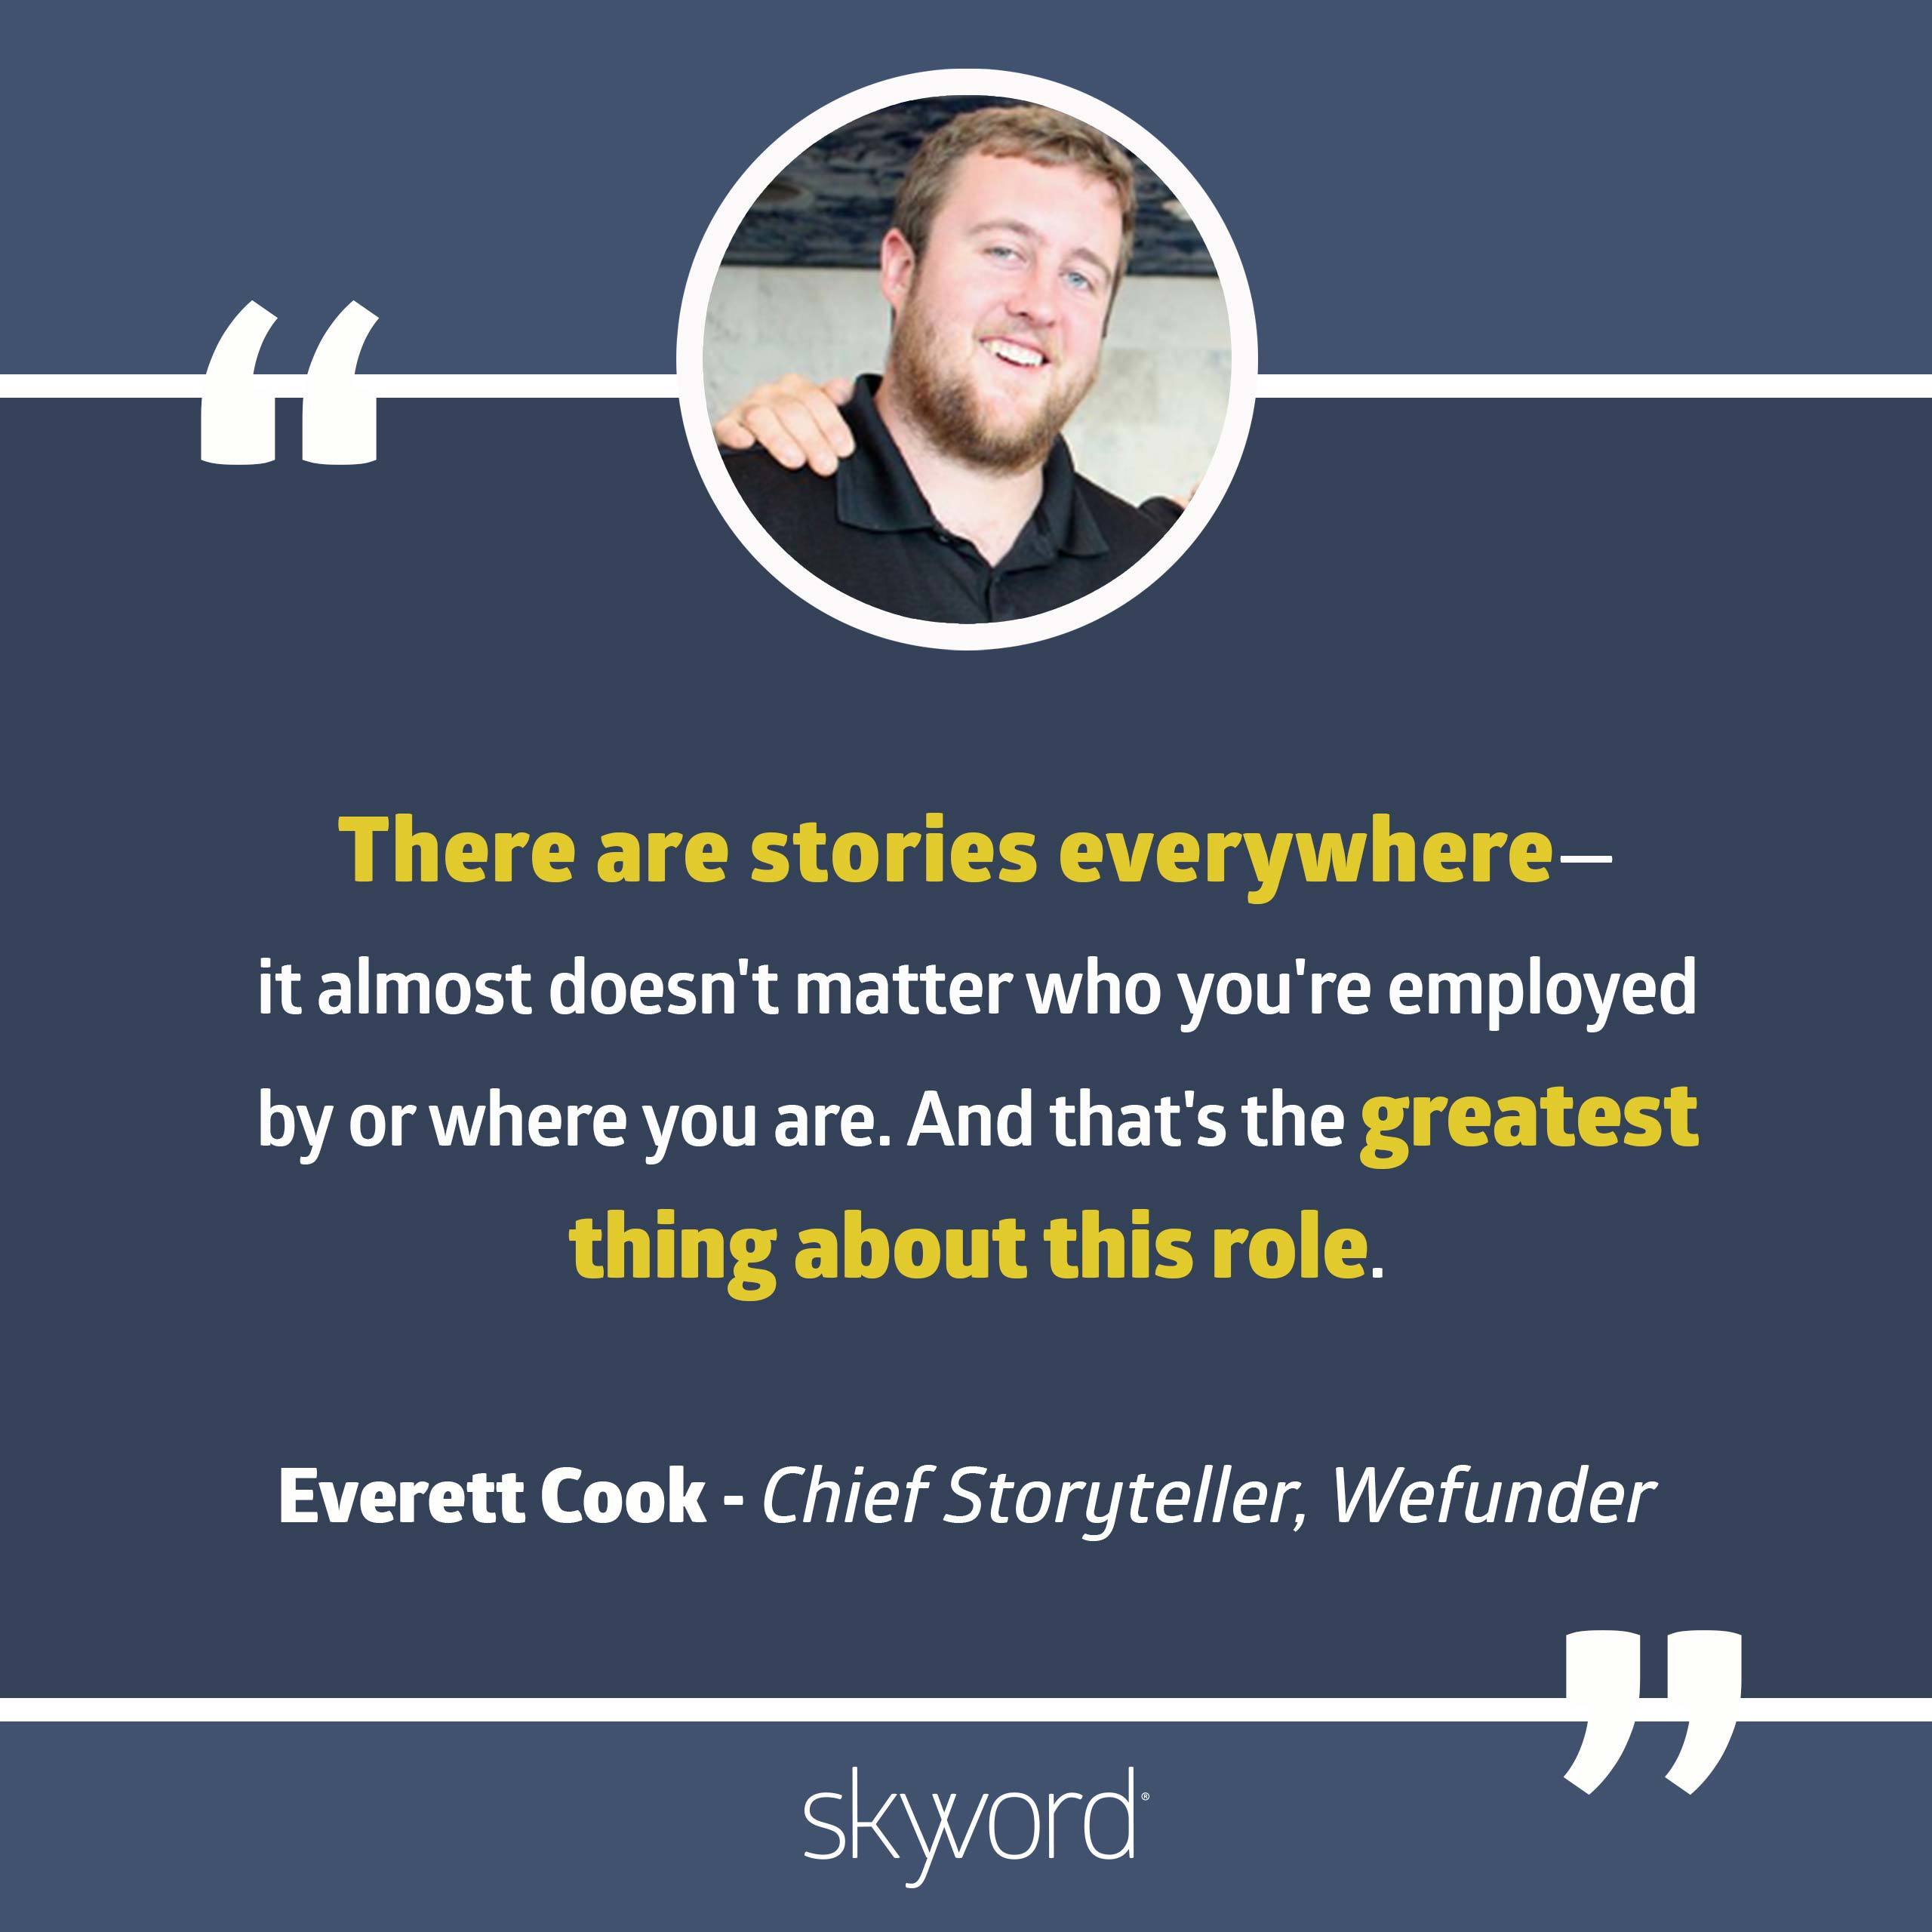 Everett Cook, Chief Storyteller, Wefunder